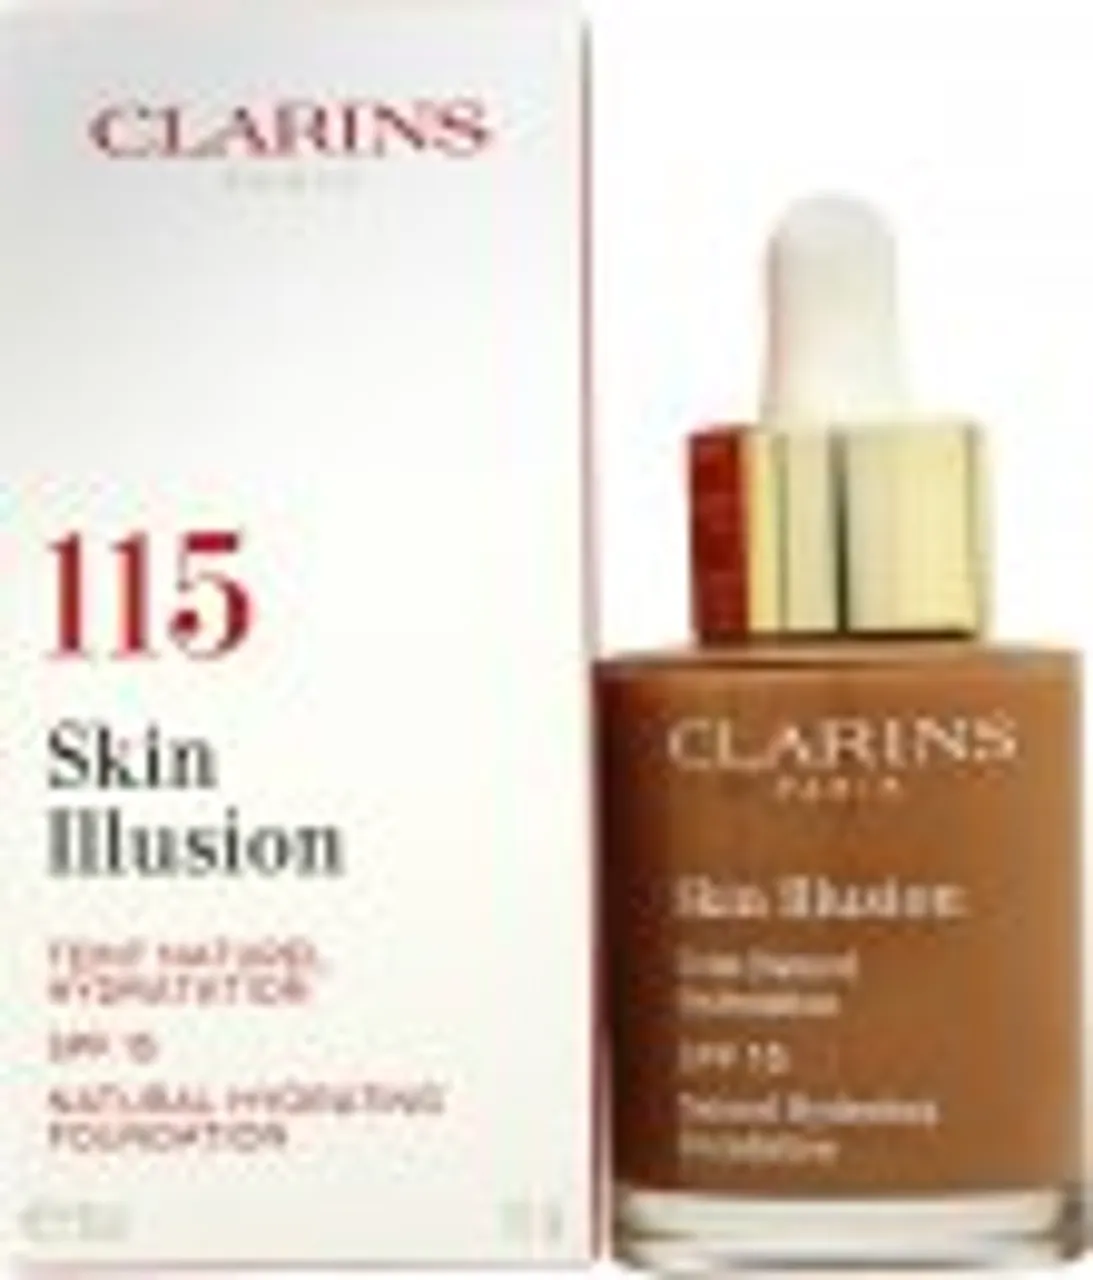 Clarins Skin Illusion Natural Hydrating Foundation SPF15 30ml - 115 Cognac